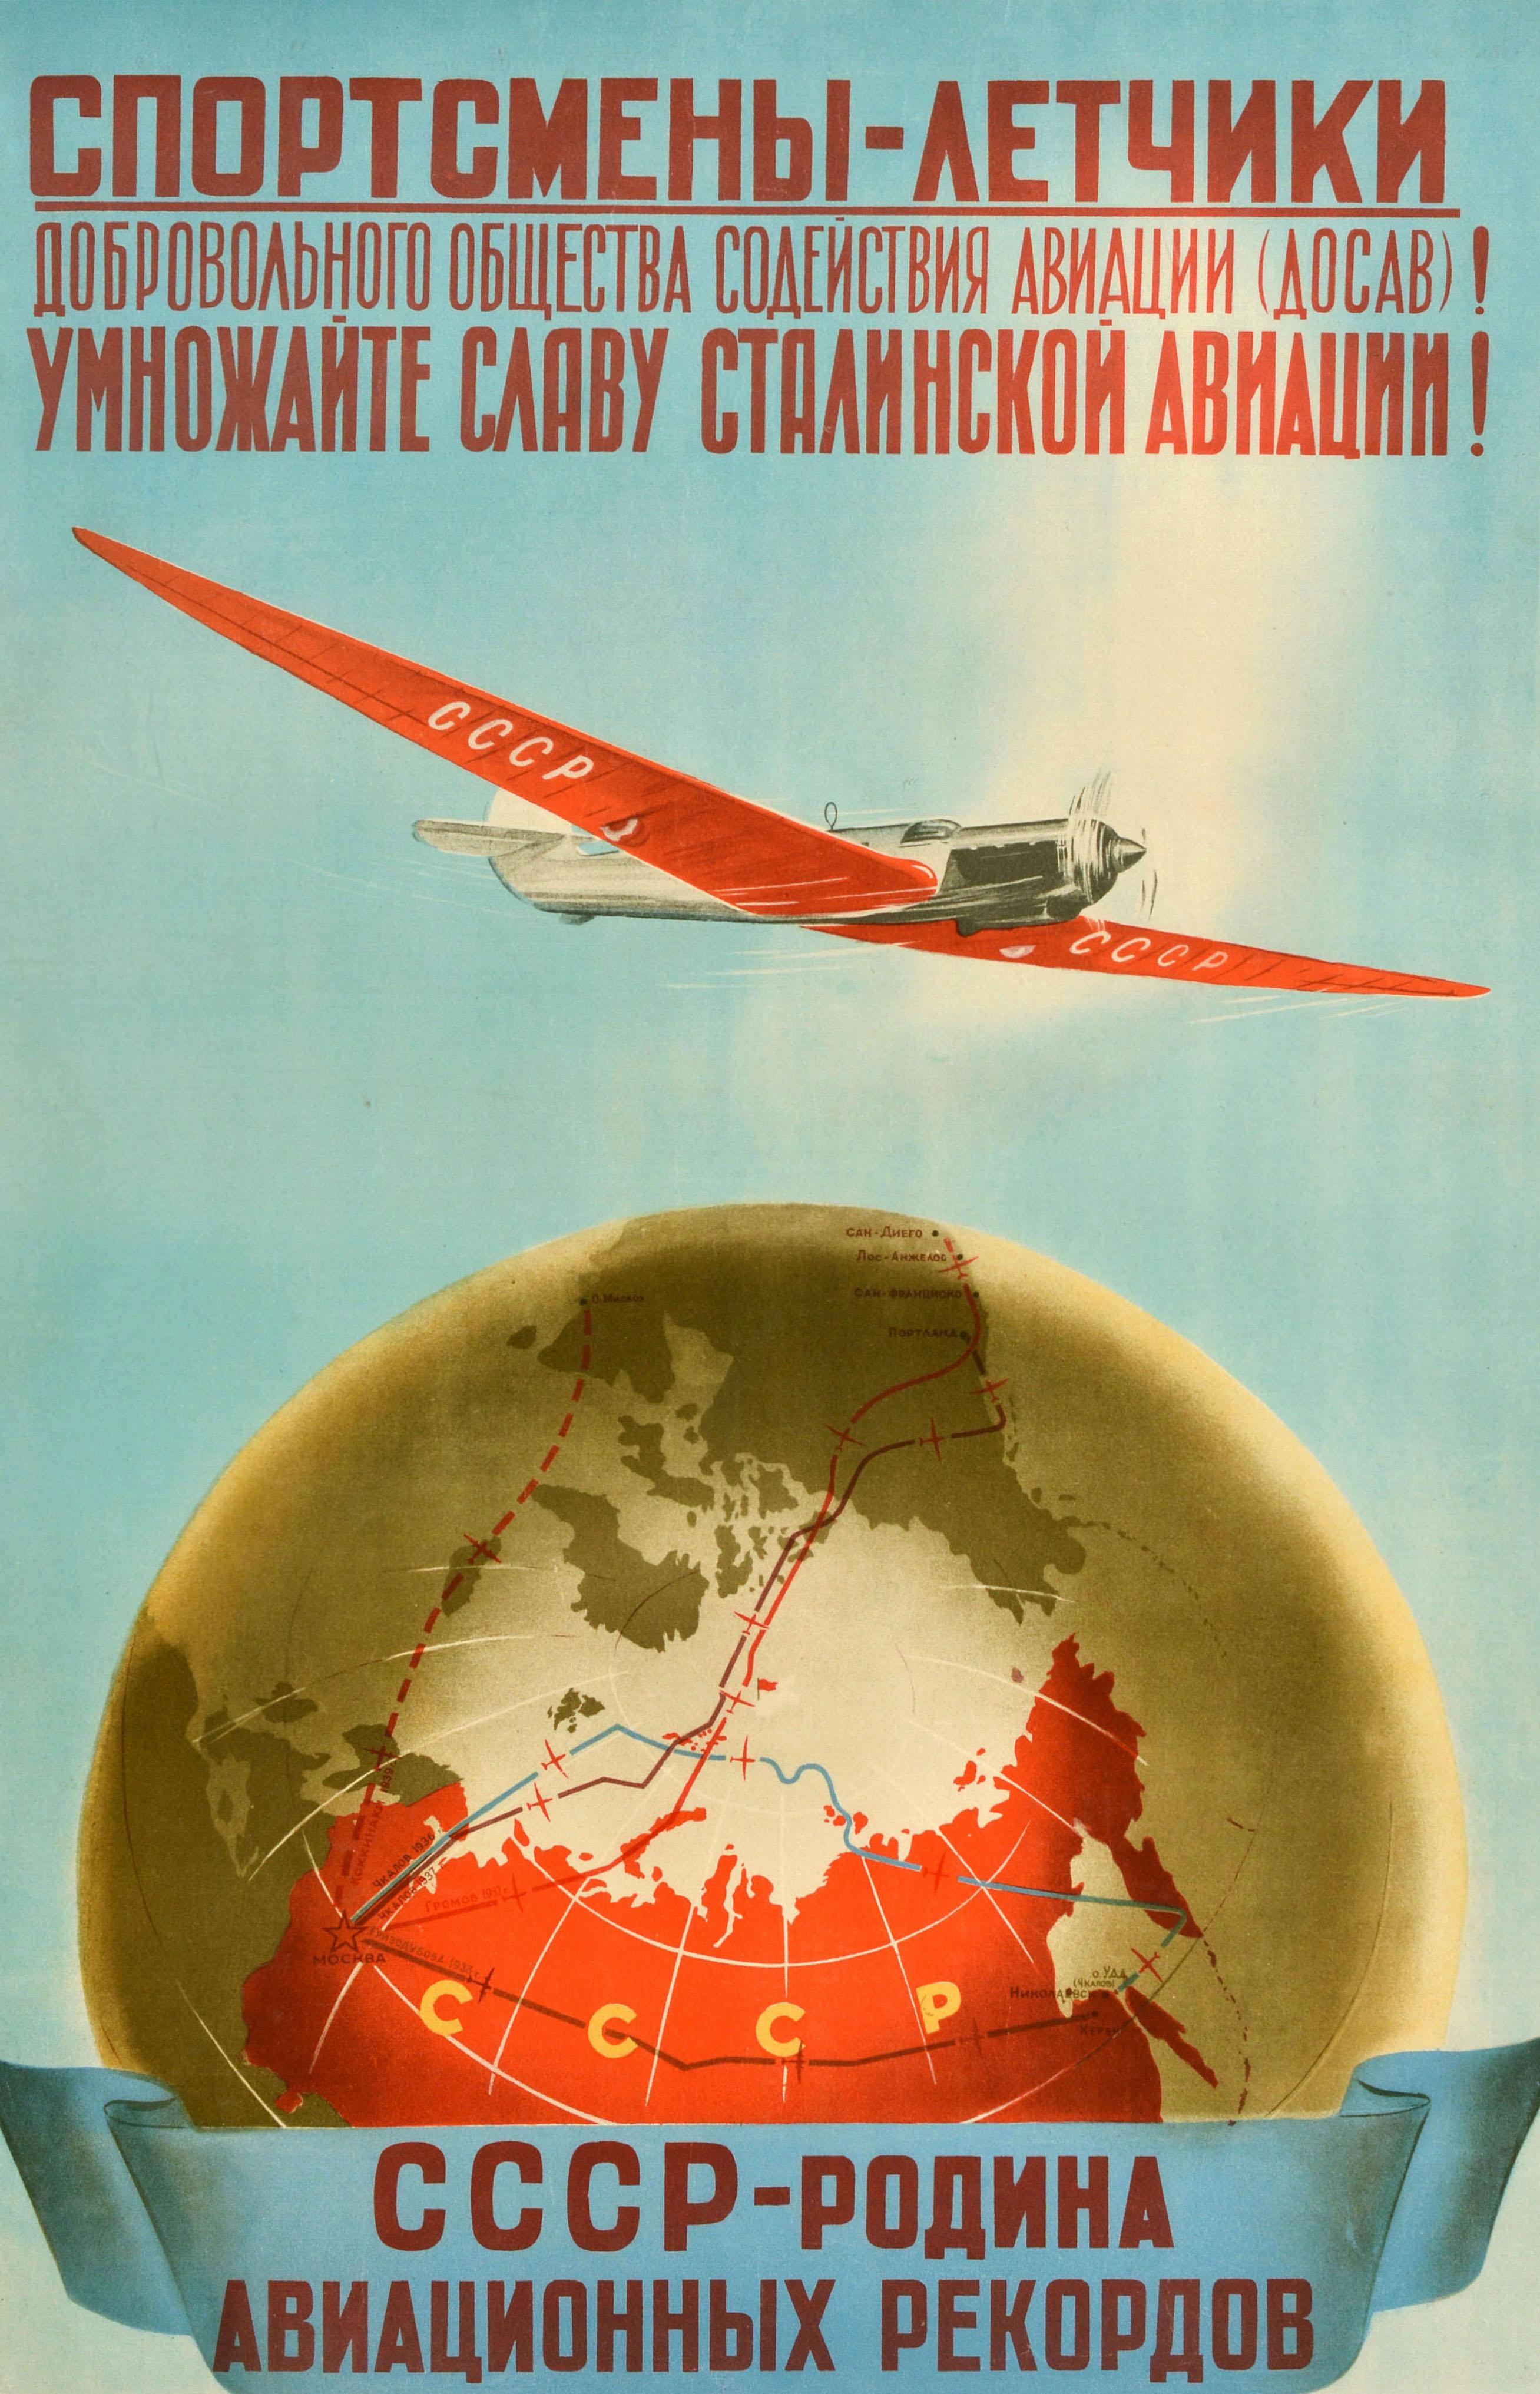 Originales sowjetisches Propagandaplakat Glory Of Stalin Aviation Records UdSSR, Vintage – Print von V. Viktorov